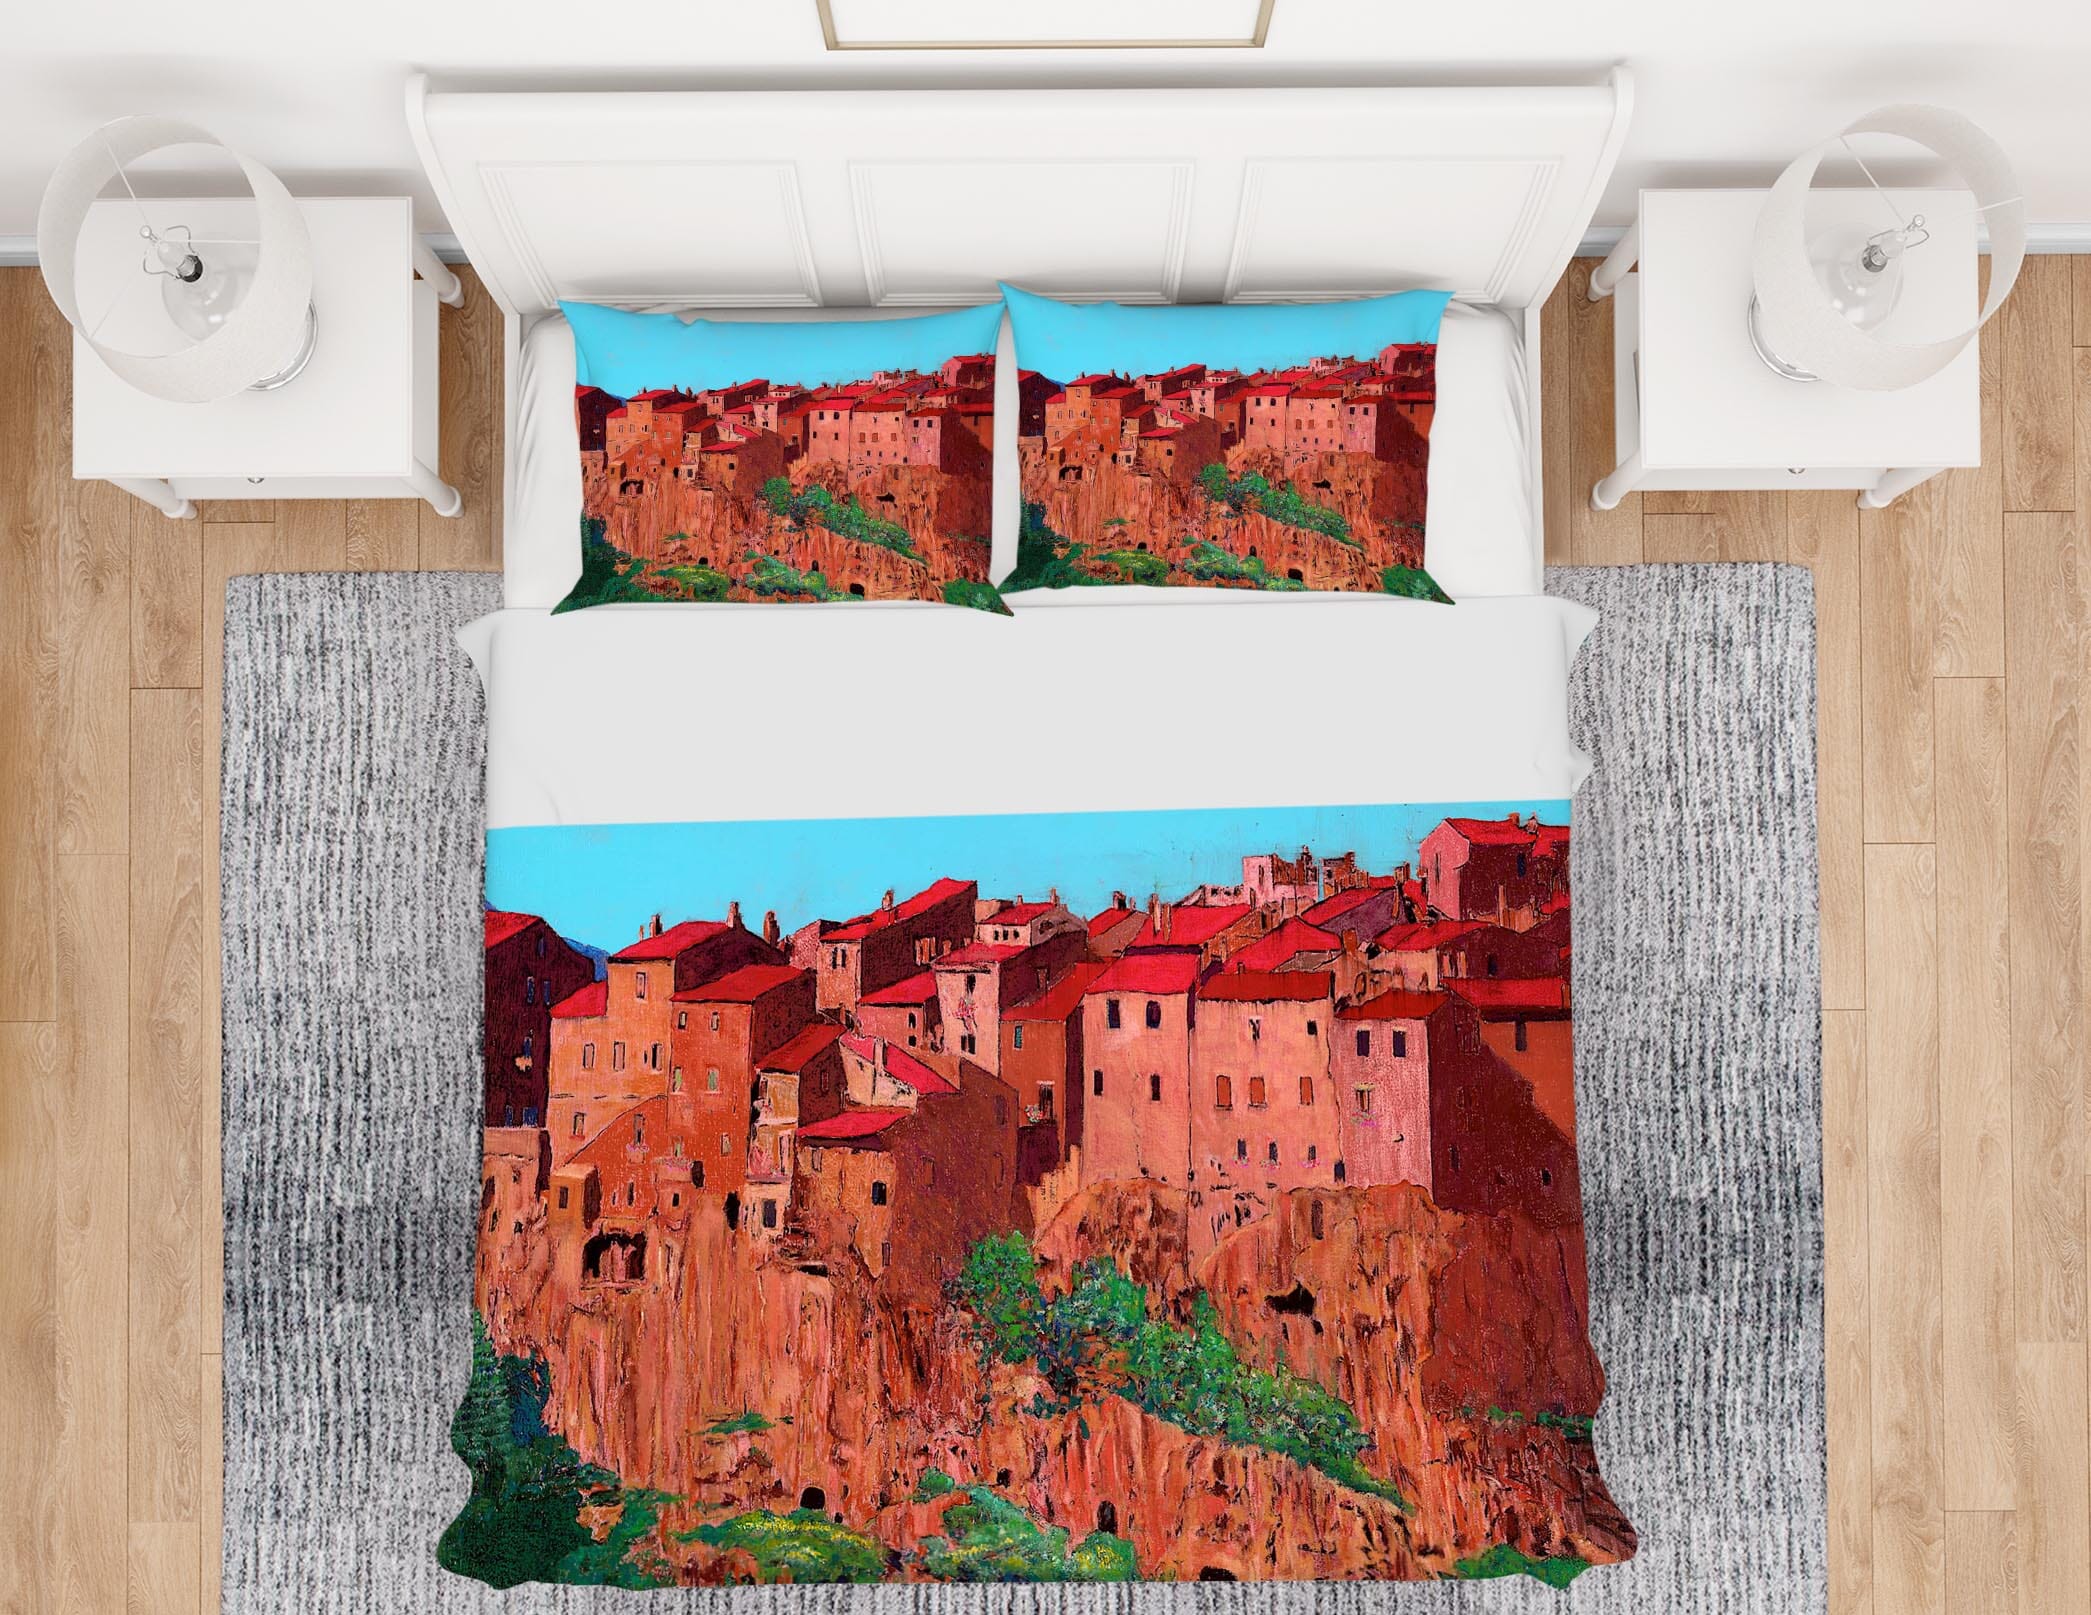 3D Pitigliano Village 2102 Allan P. Friedlander Bedding Bed Pillowcases Quilt Quiet Covers AJ Creativity Home 